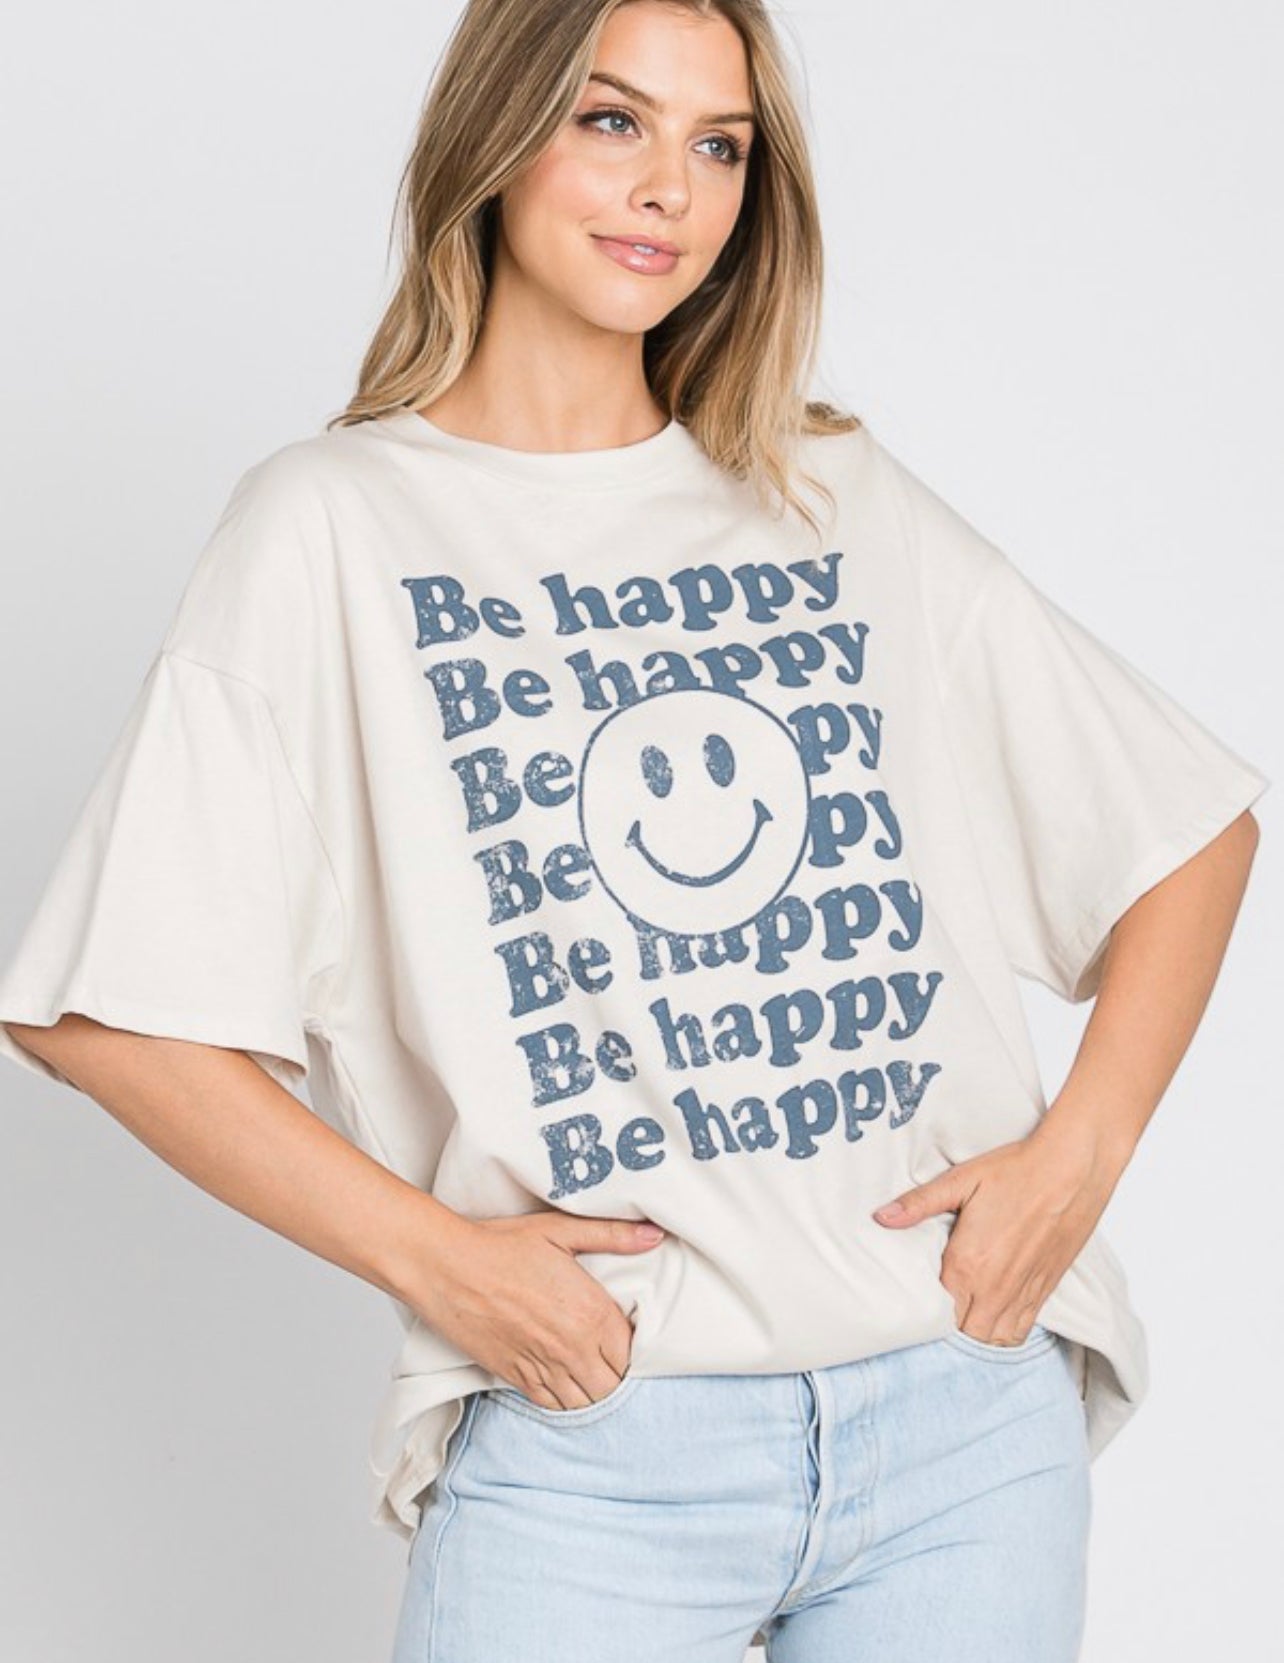 Be happy Smiley Tee